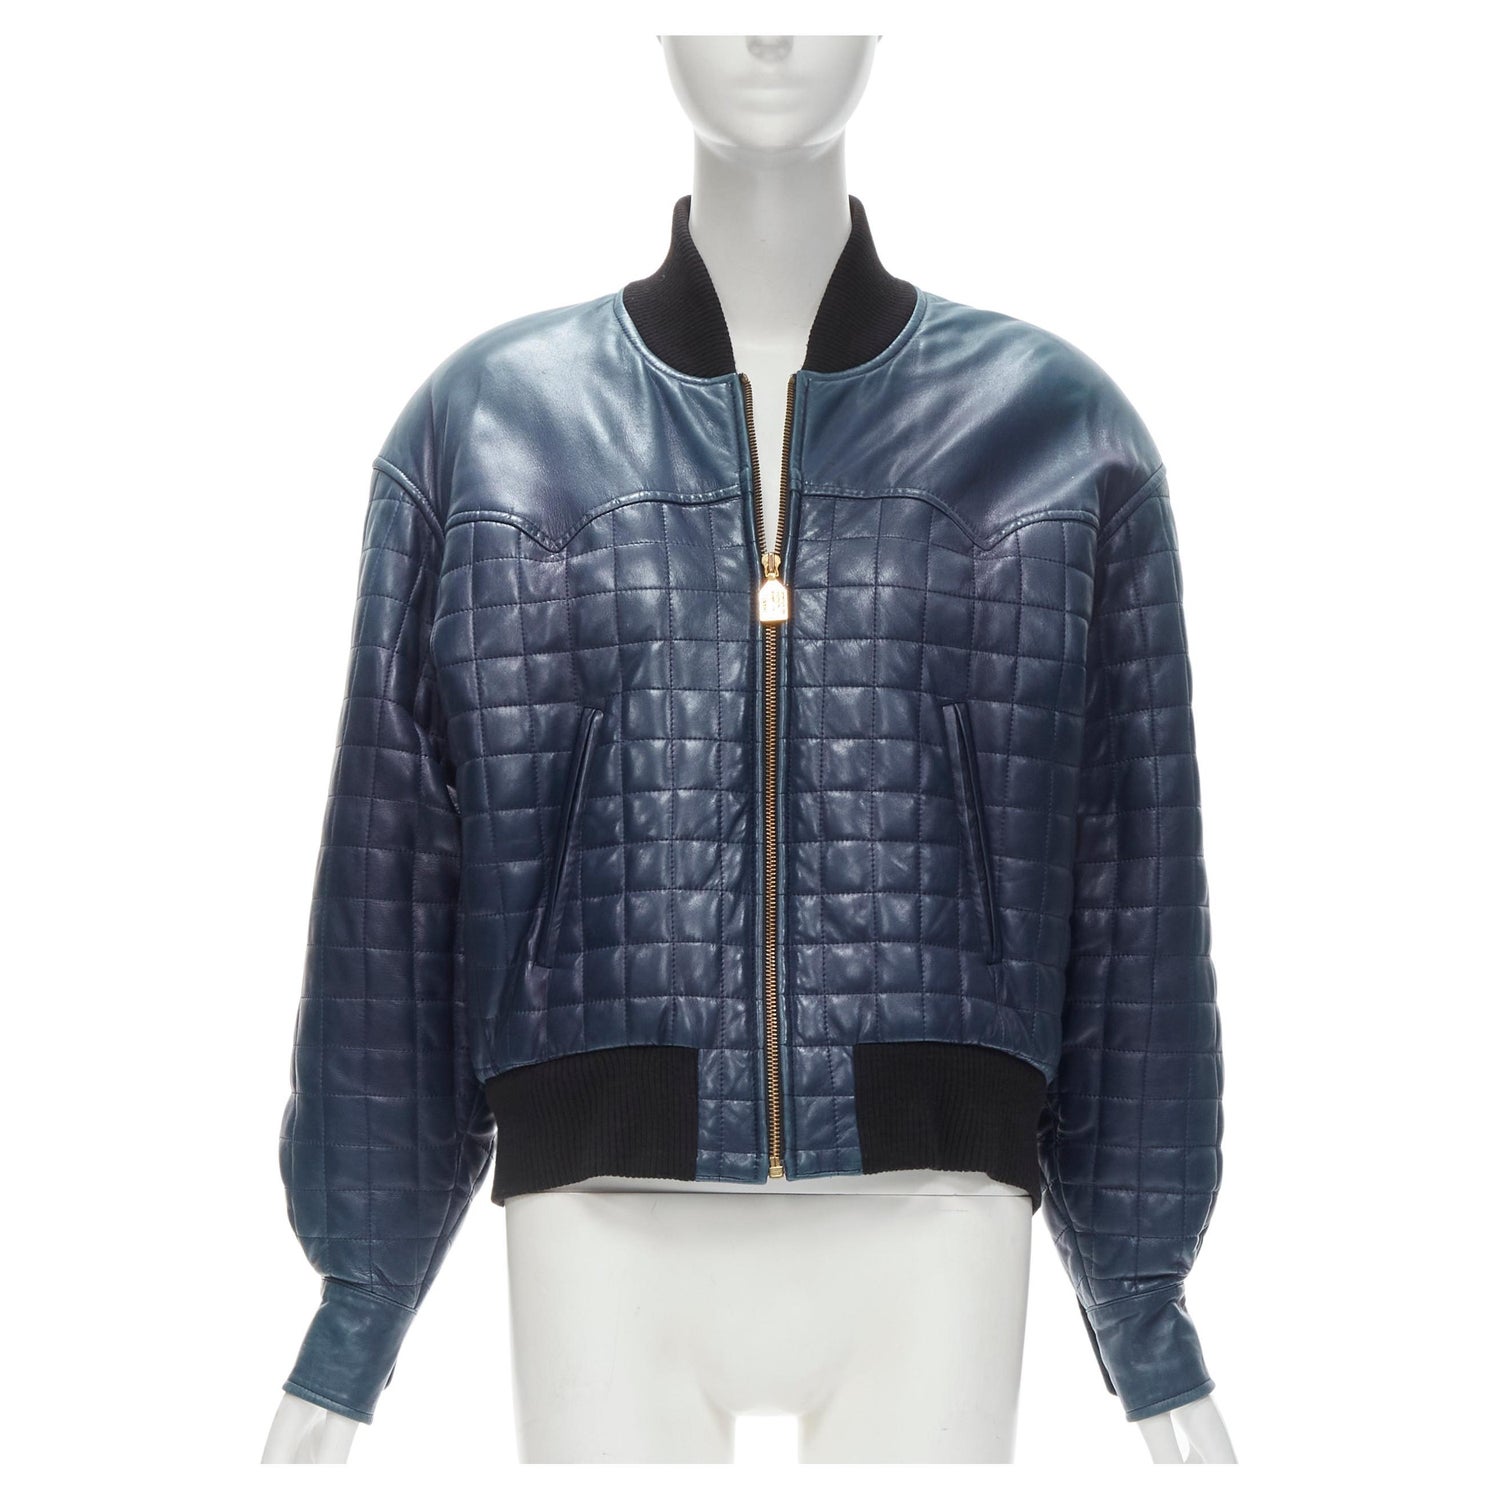 CHANEL, Jackets & Coats, Chanel Vintage Puffer Jacket